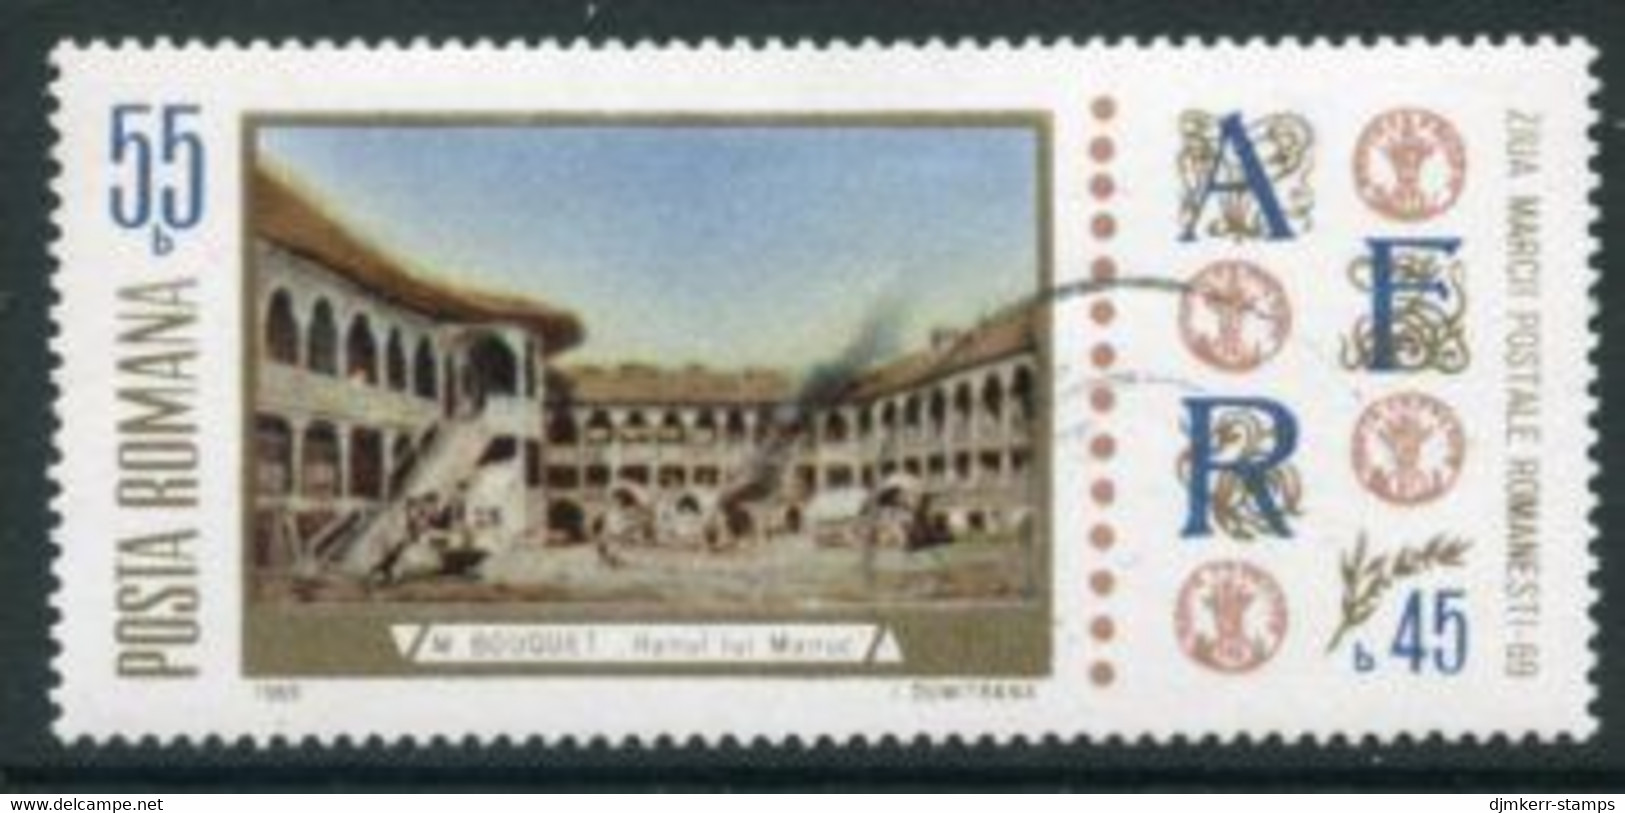 ROMANIA 1969 Stamp Day Used.  Michel 2808 - Usado